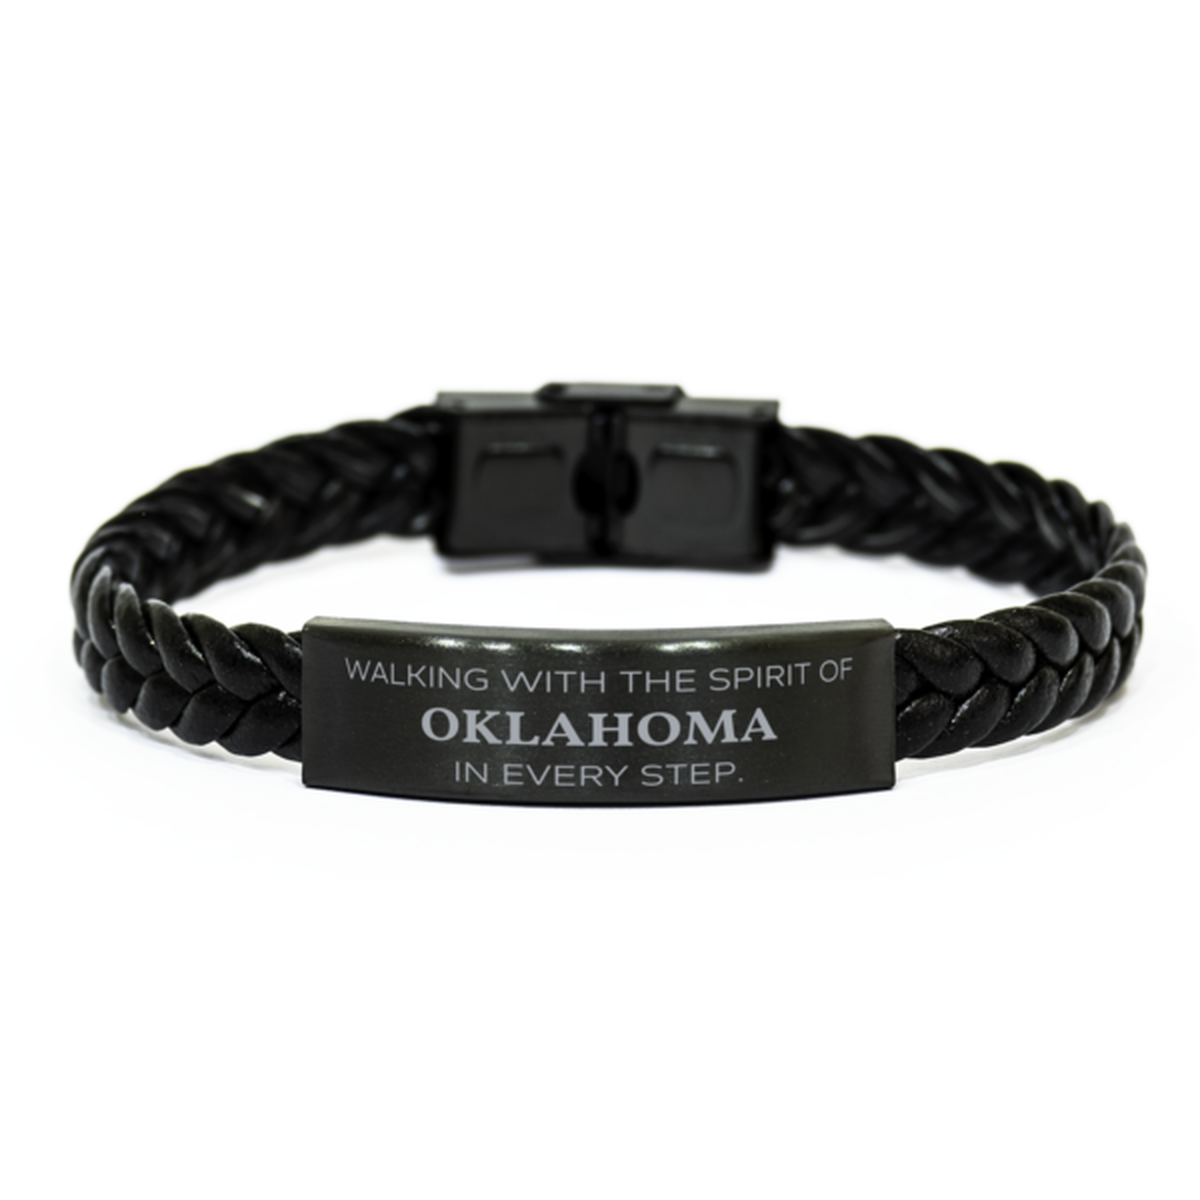 Oklahoma Gifts, Walking with the spirit, Love Oklahoma Birthday Christmas Braided Leather Bracelet For Oklahoma People, Men, Women, Friends